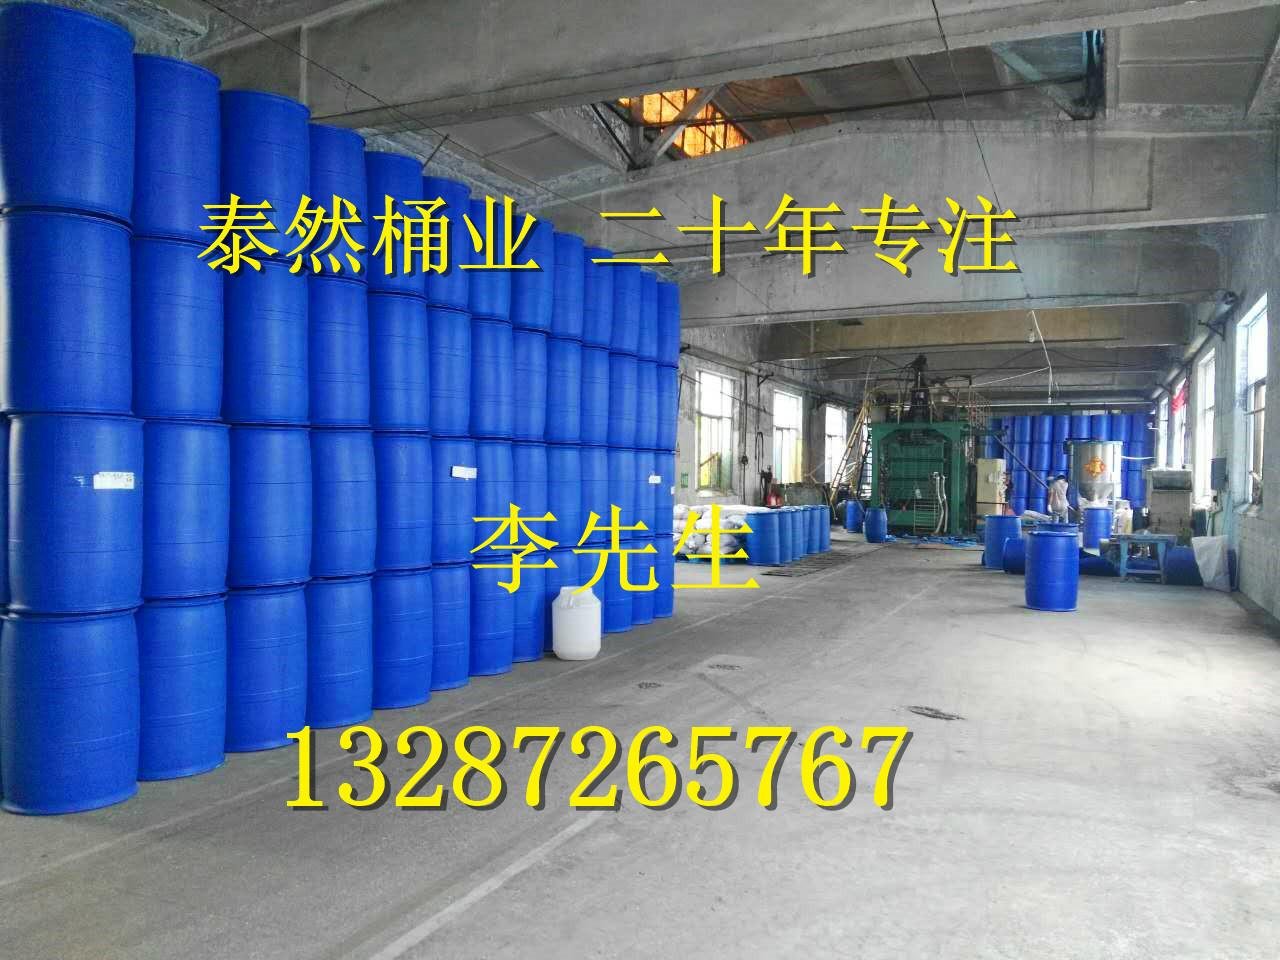 200L甲醇塑料桶|耐高温耐腐蚀|甲醇塑料包装桶|质优价廉 3